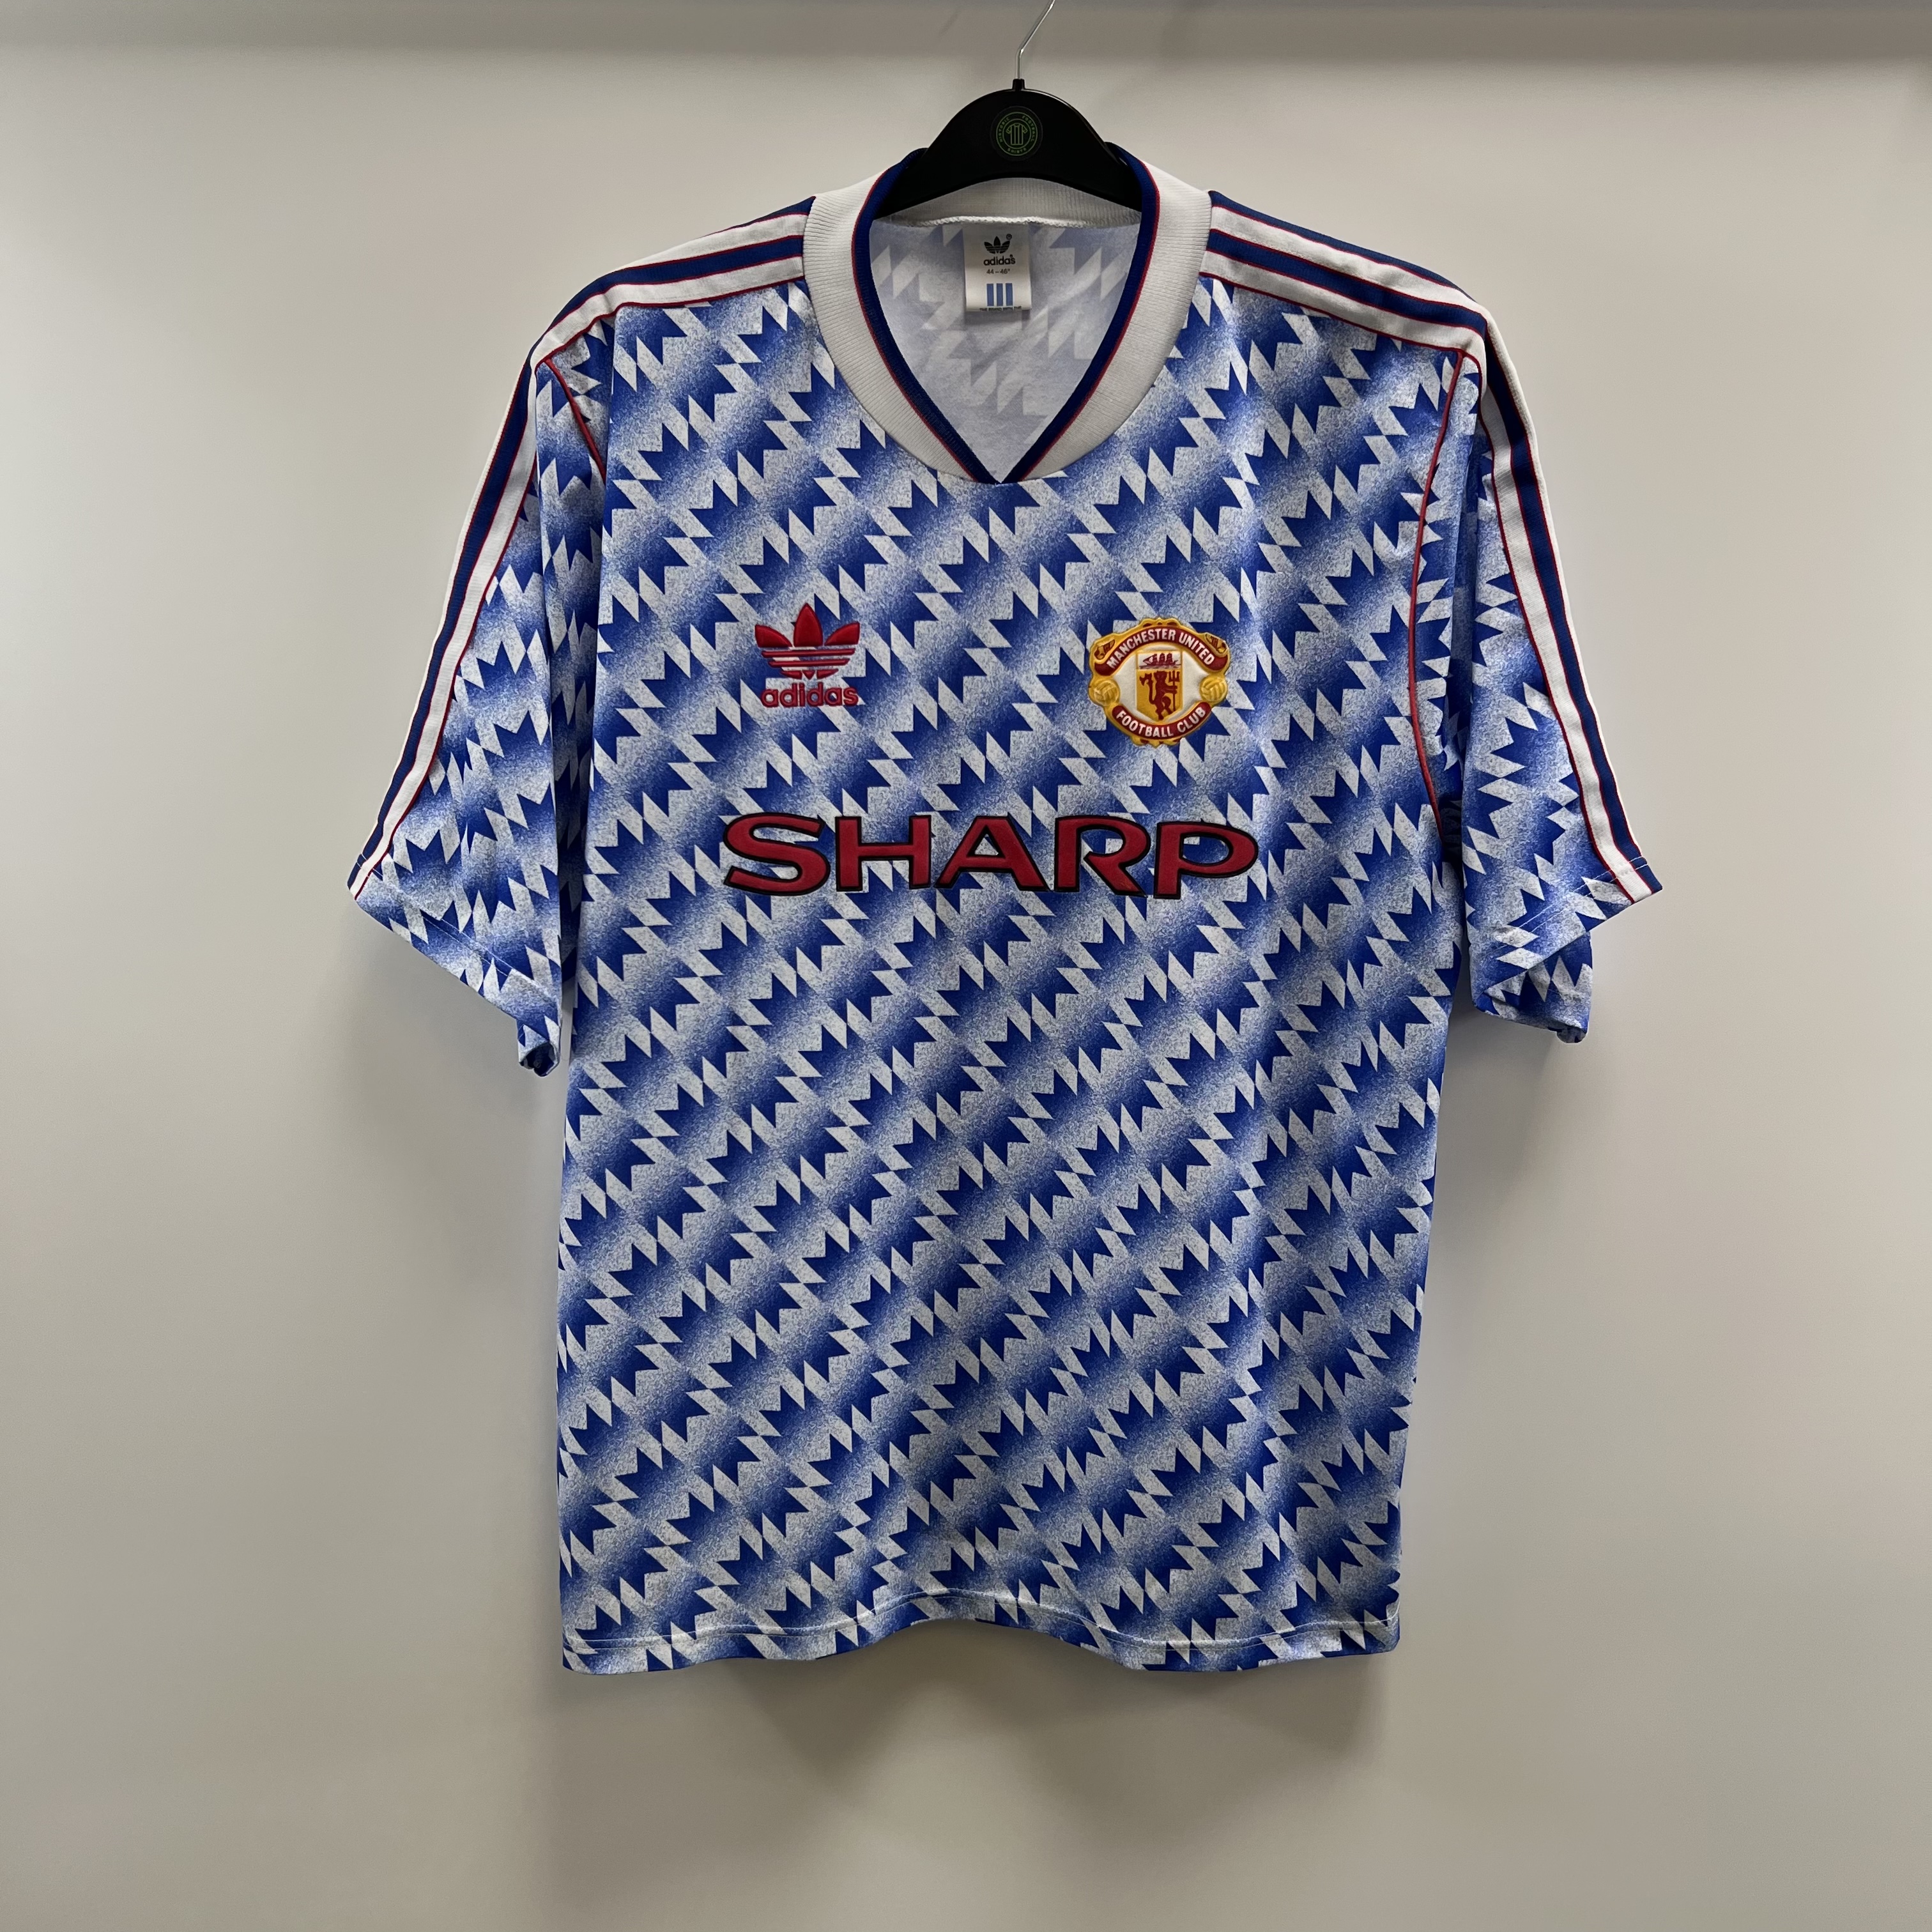 1990-92 Manchester United Away Shirt M